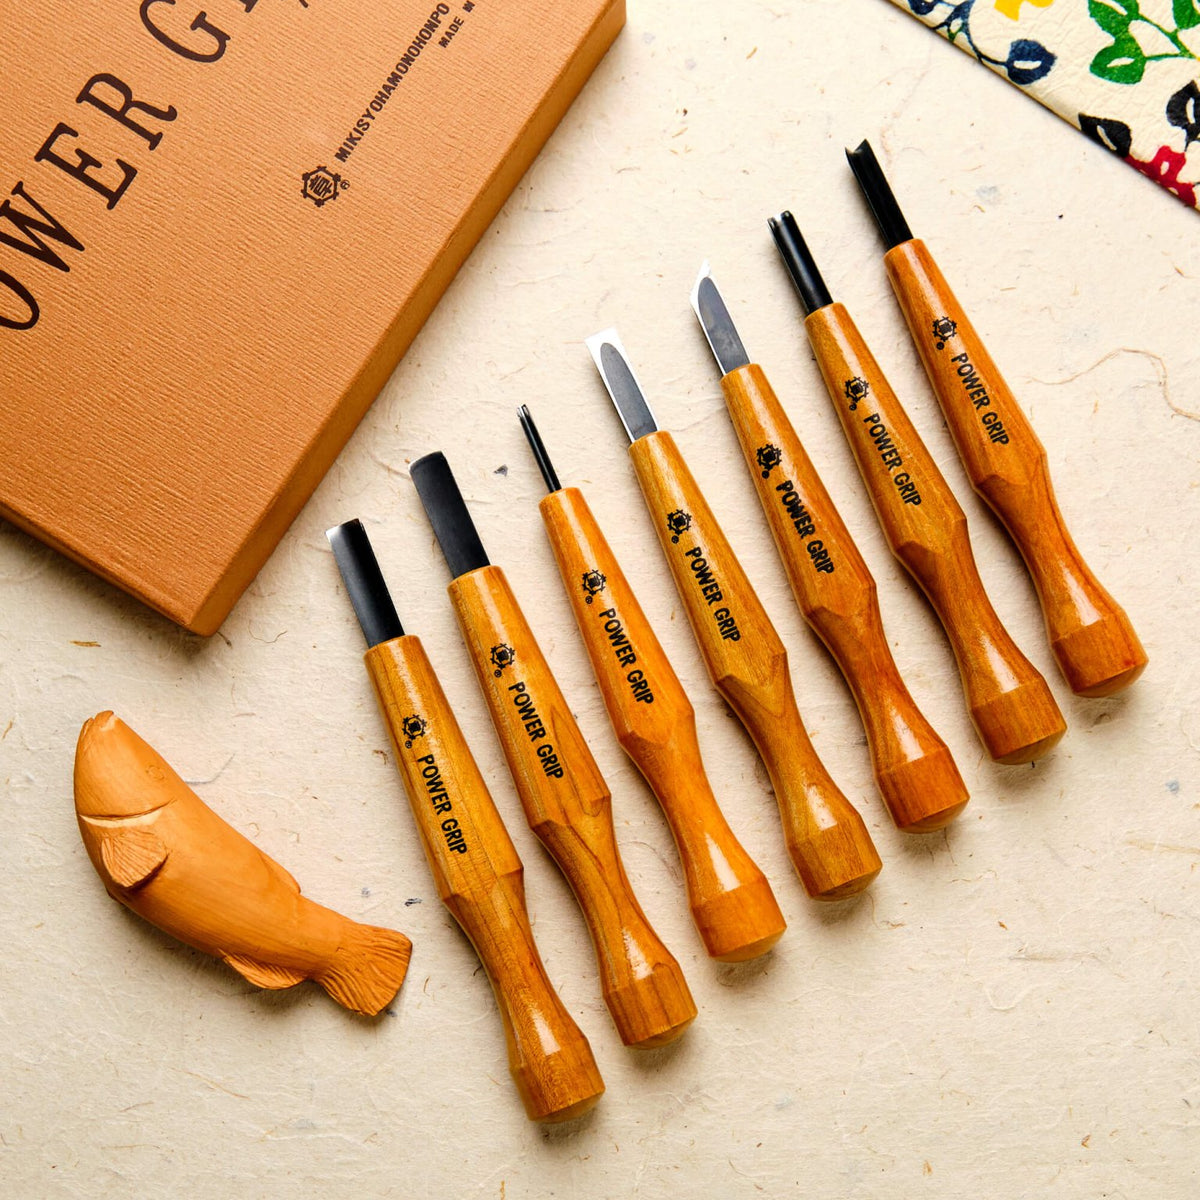 Japanese Power Grip V & U Chisel Tool Set Best for Wood-Carving